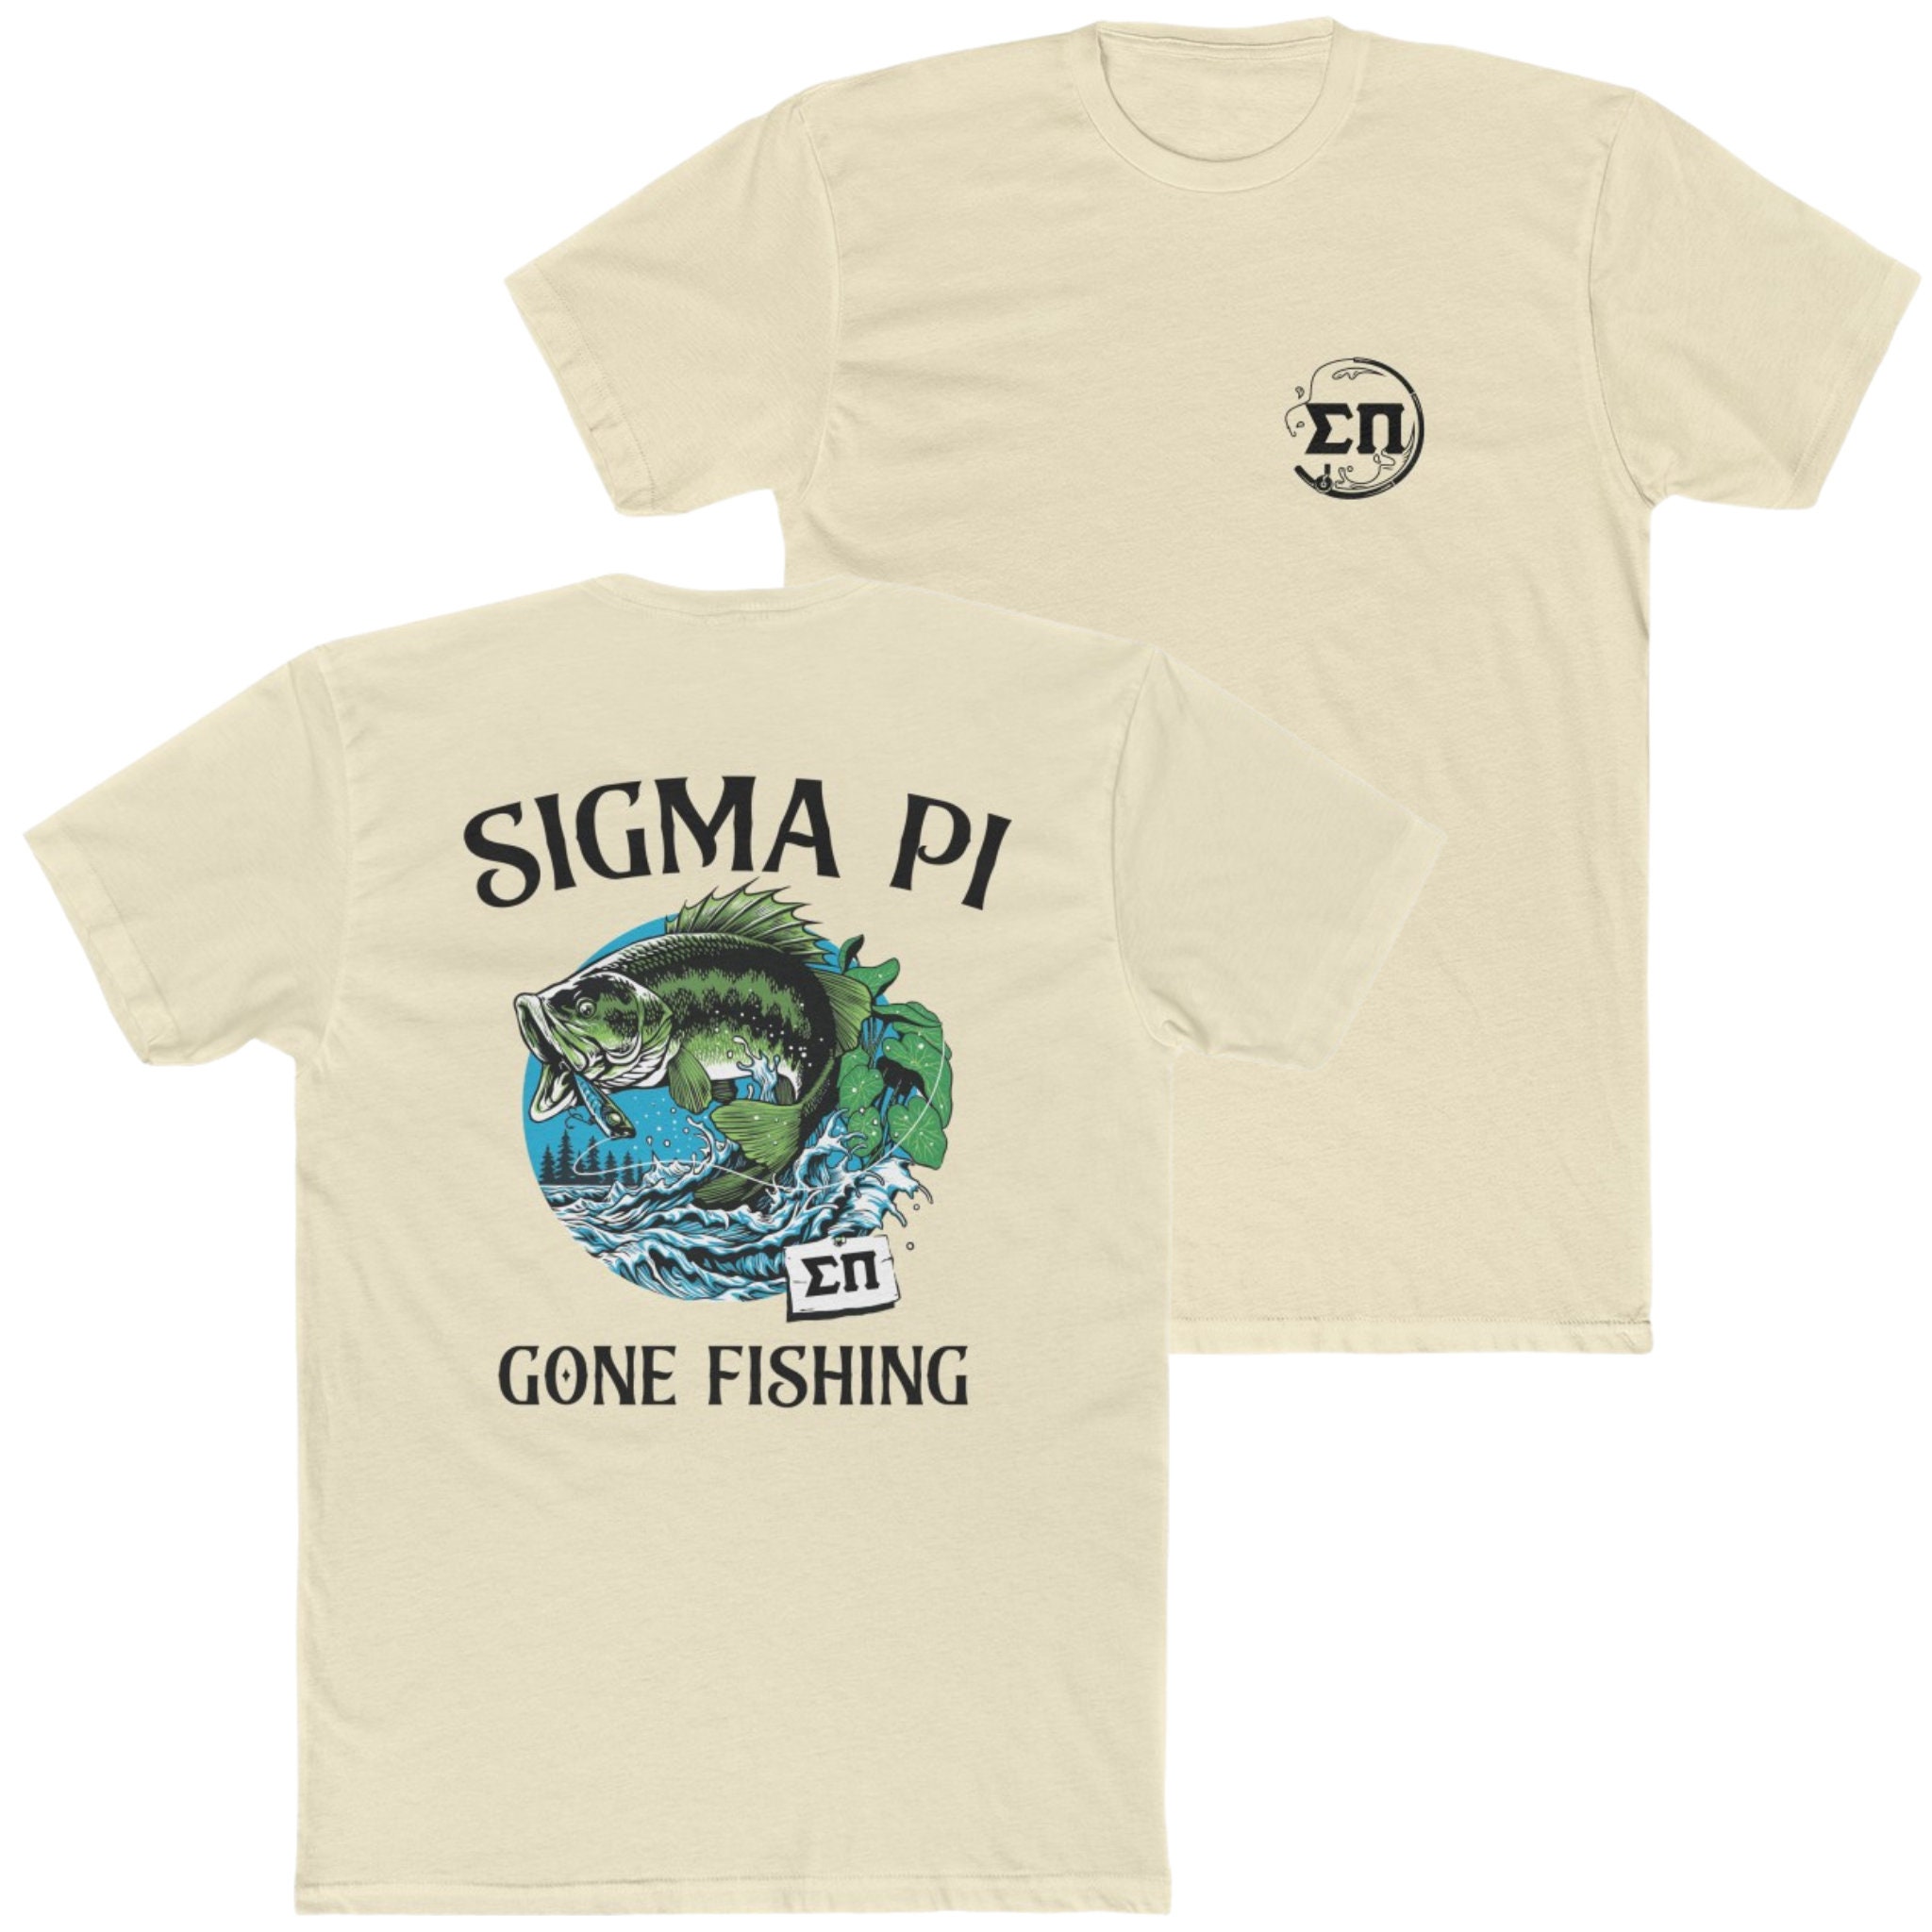 Sigma Pi Graphic T-shirt Gone Fishing -  Canada